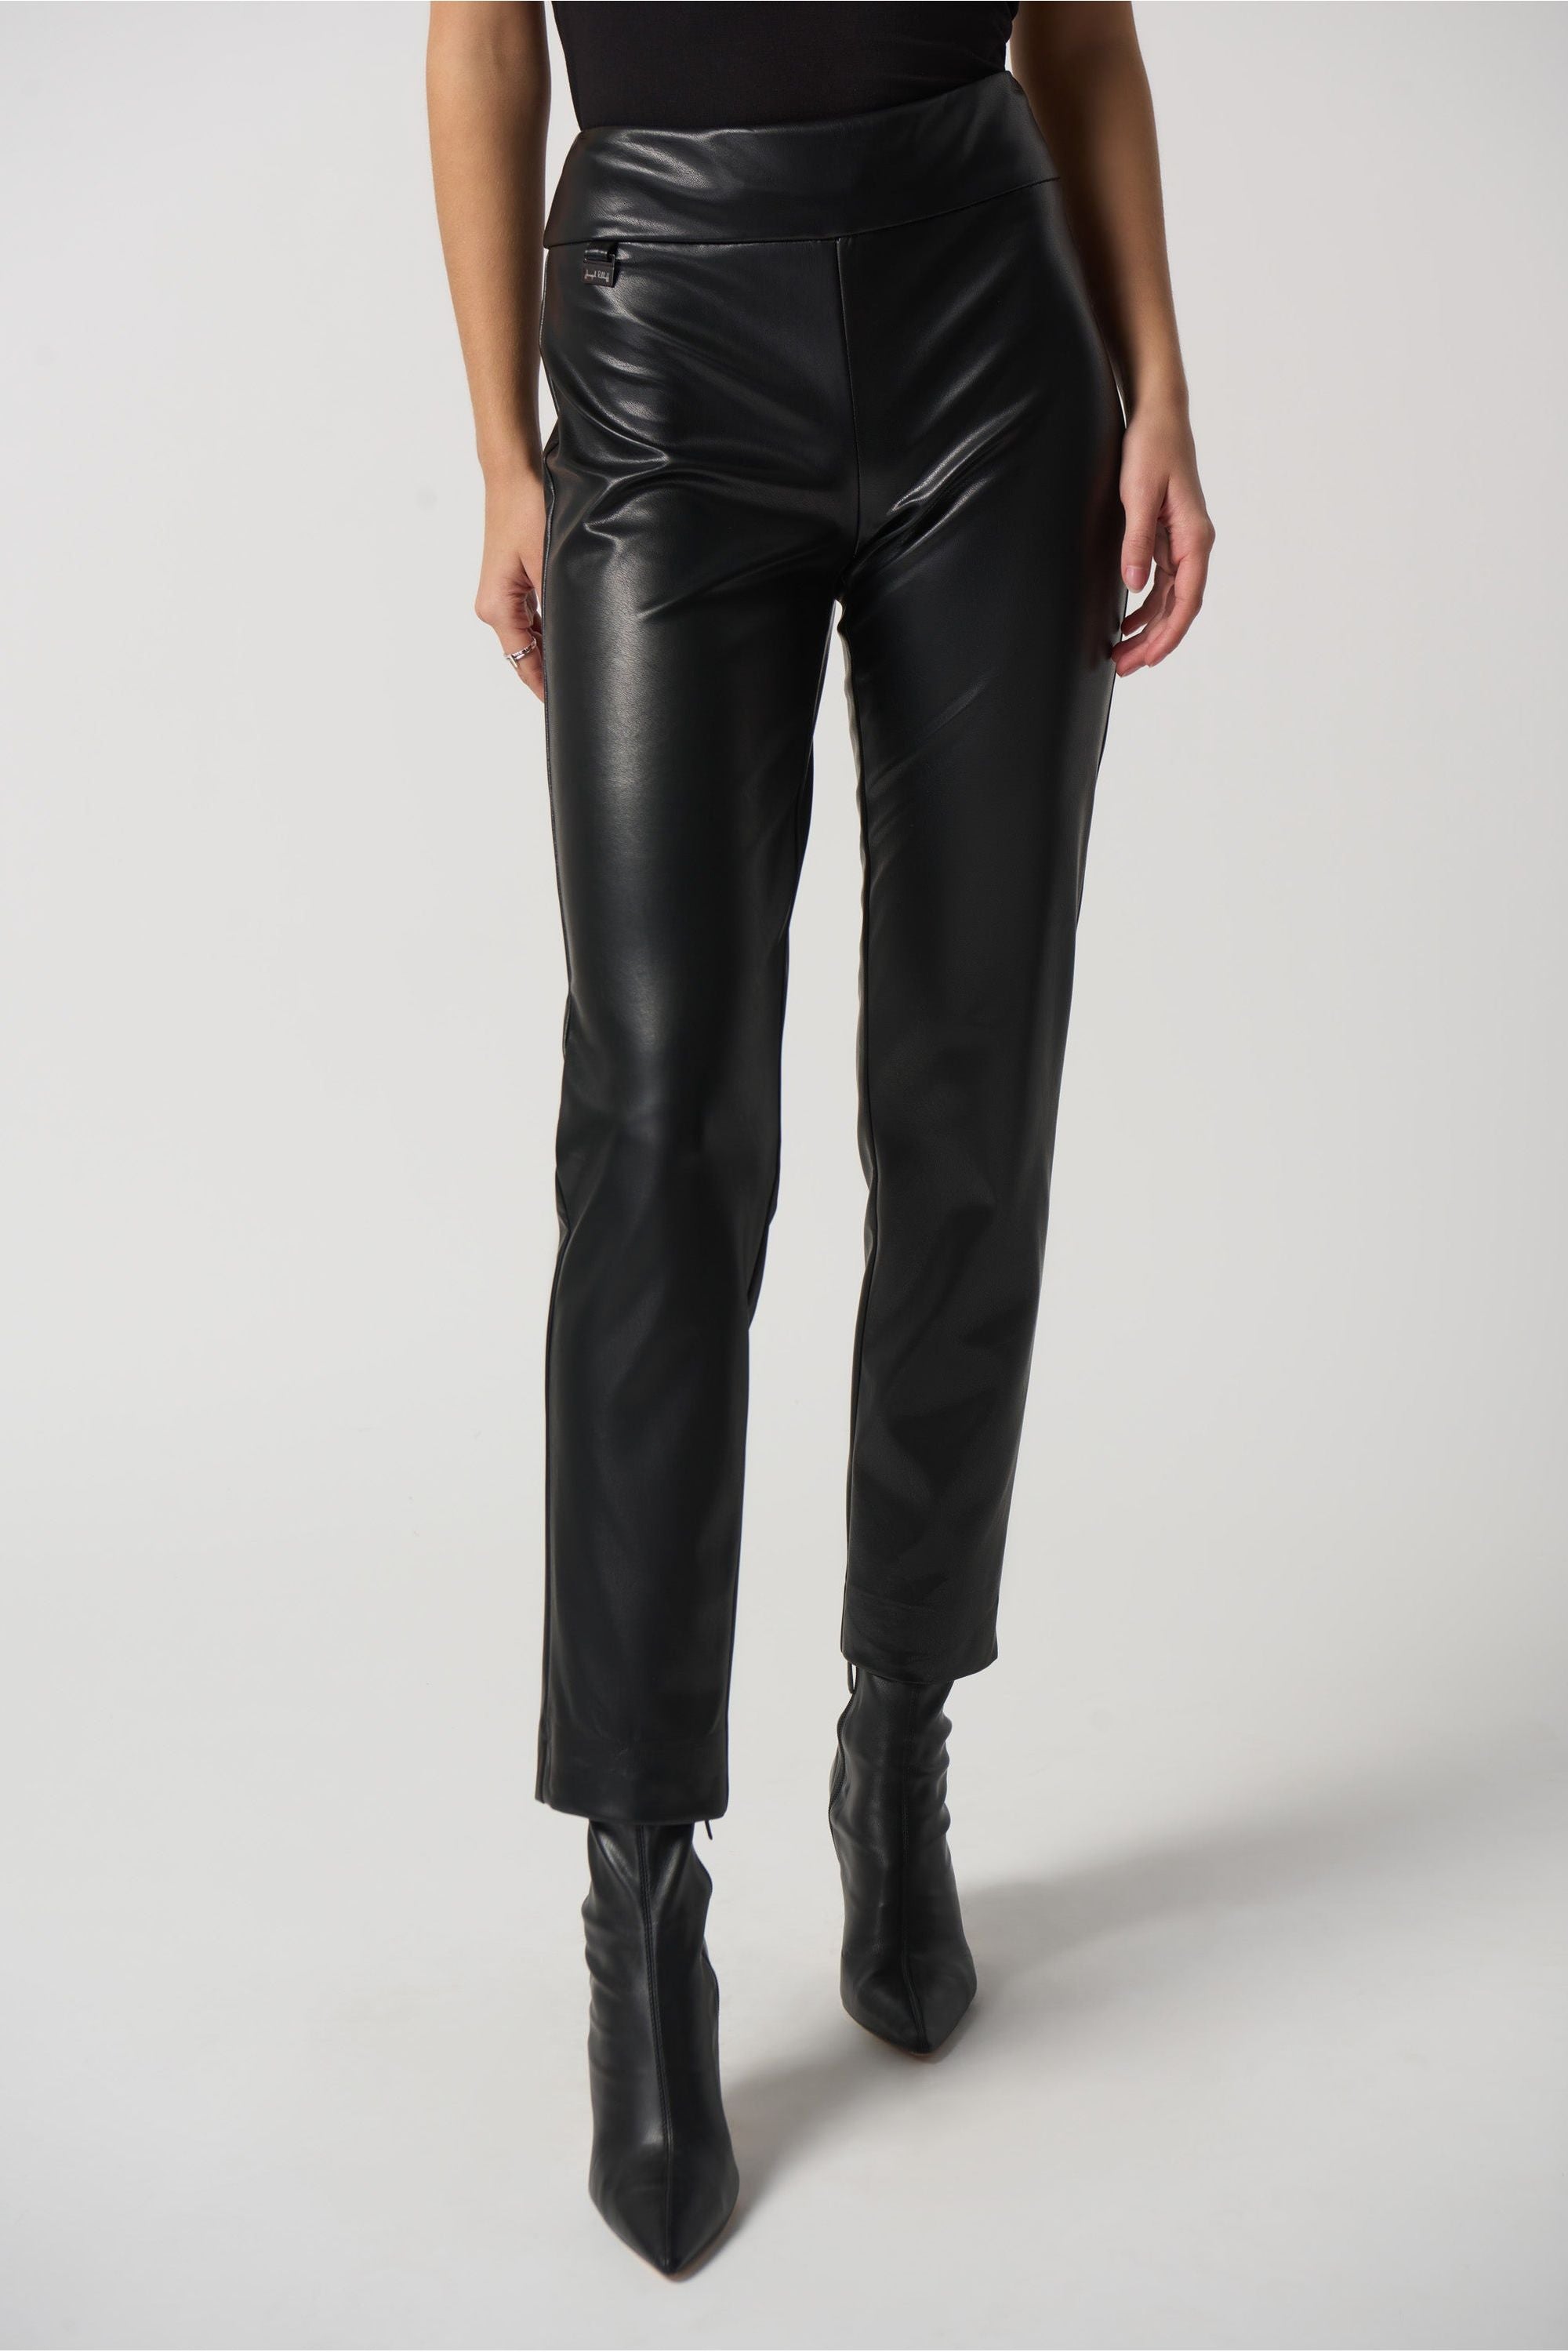 Joseph Ribkoff Faux Leather Pant - Style 223196